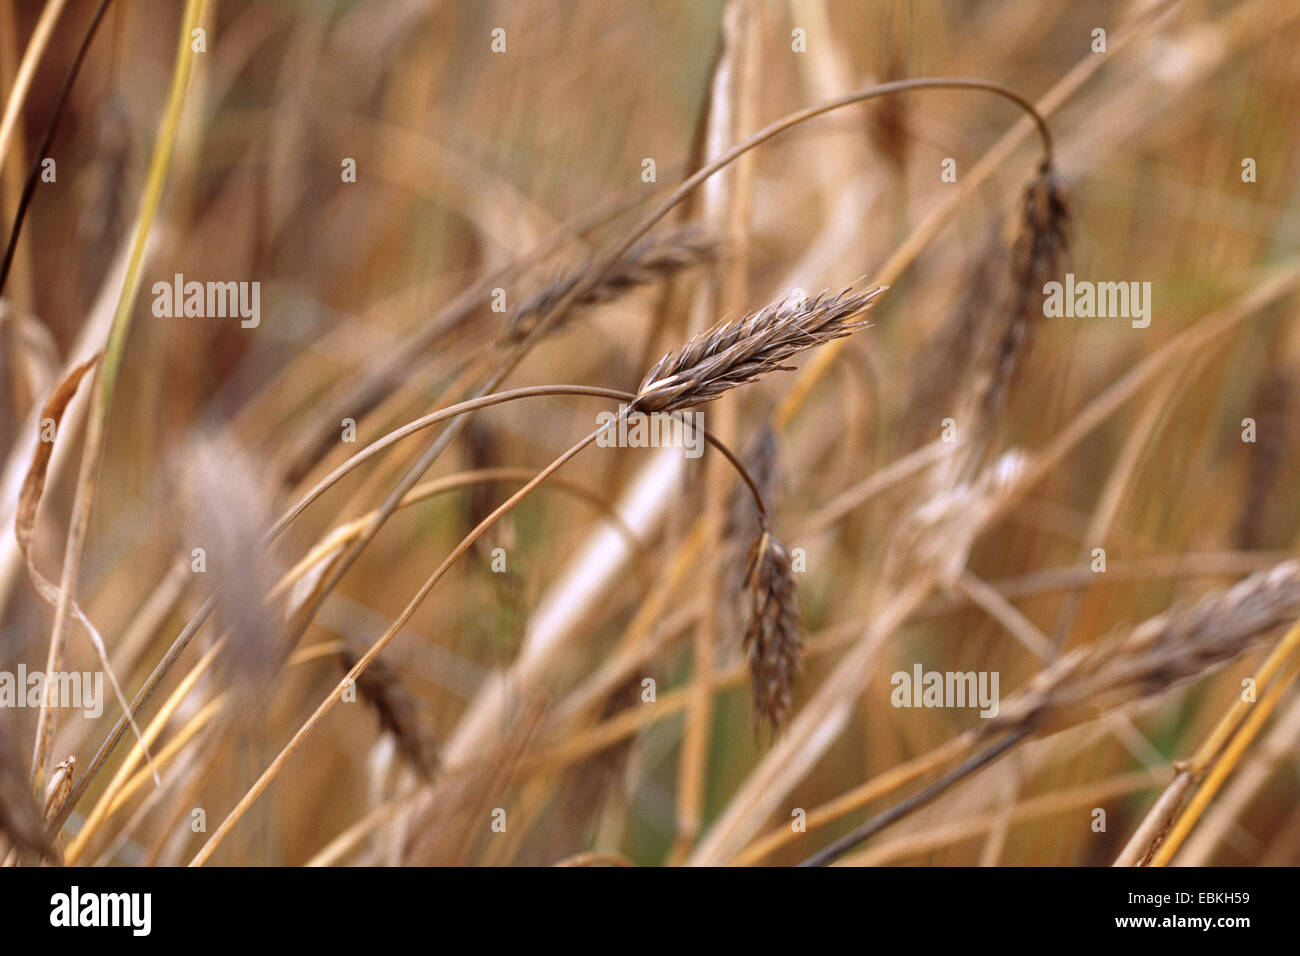 barley cultivar (Hordeum vulgare convar. intermedium var. atratum, Hordeum vulgare var. atratum), spikes Stock Photo